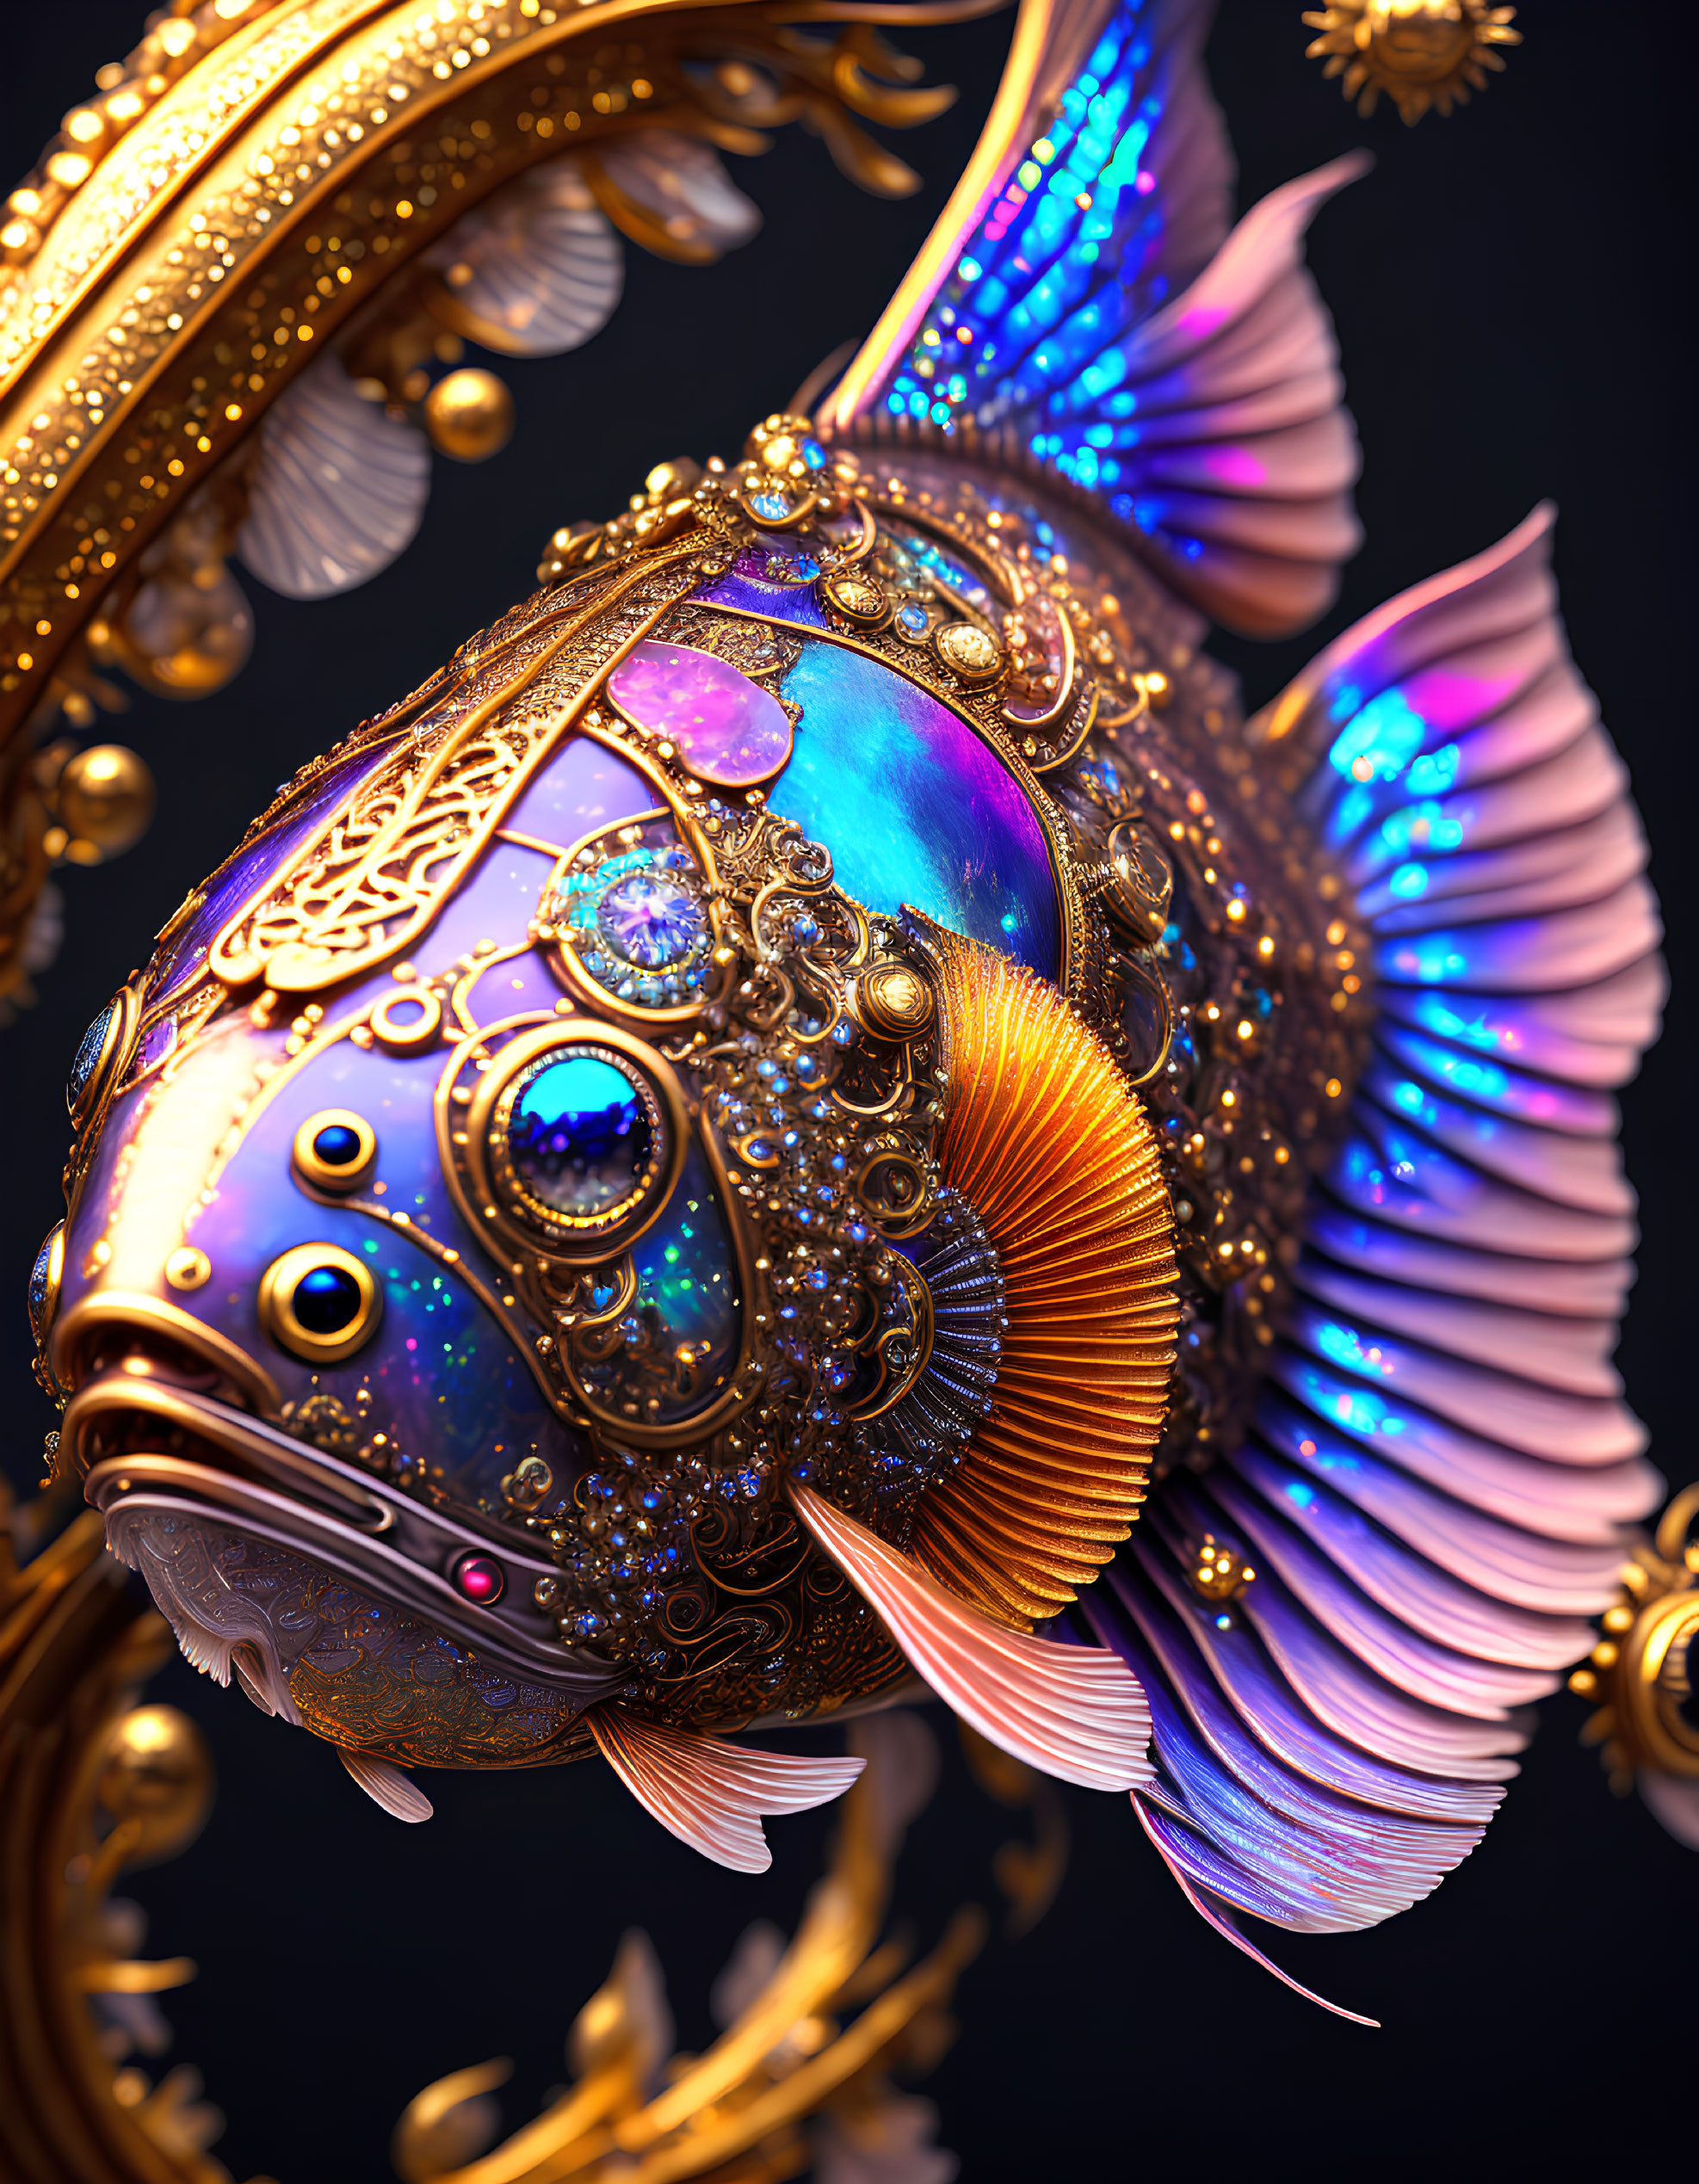 Intricately designed digital artwork of a golden fish